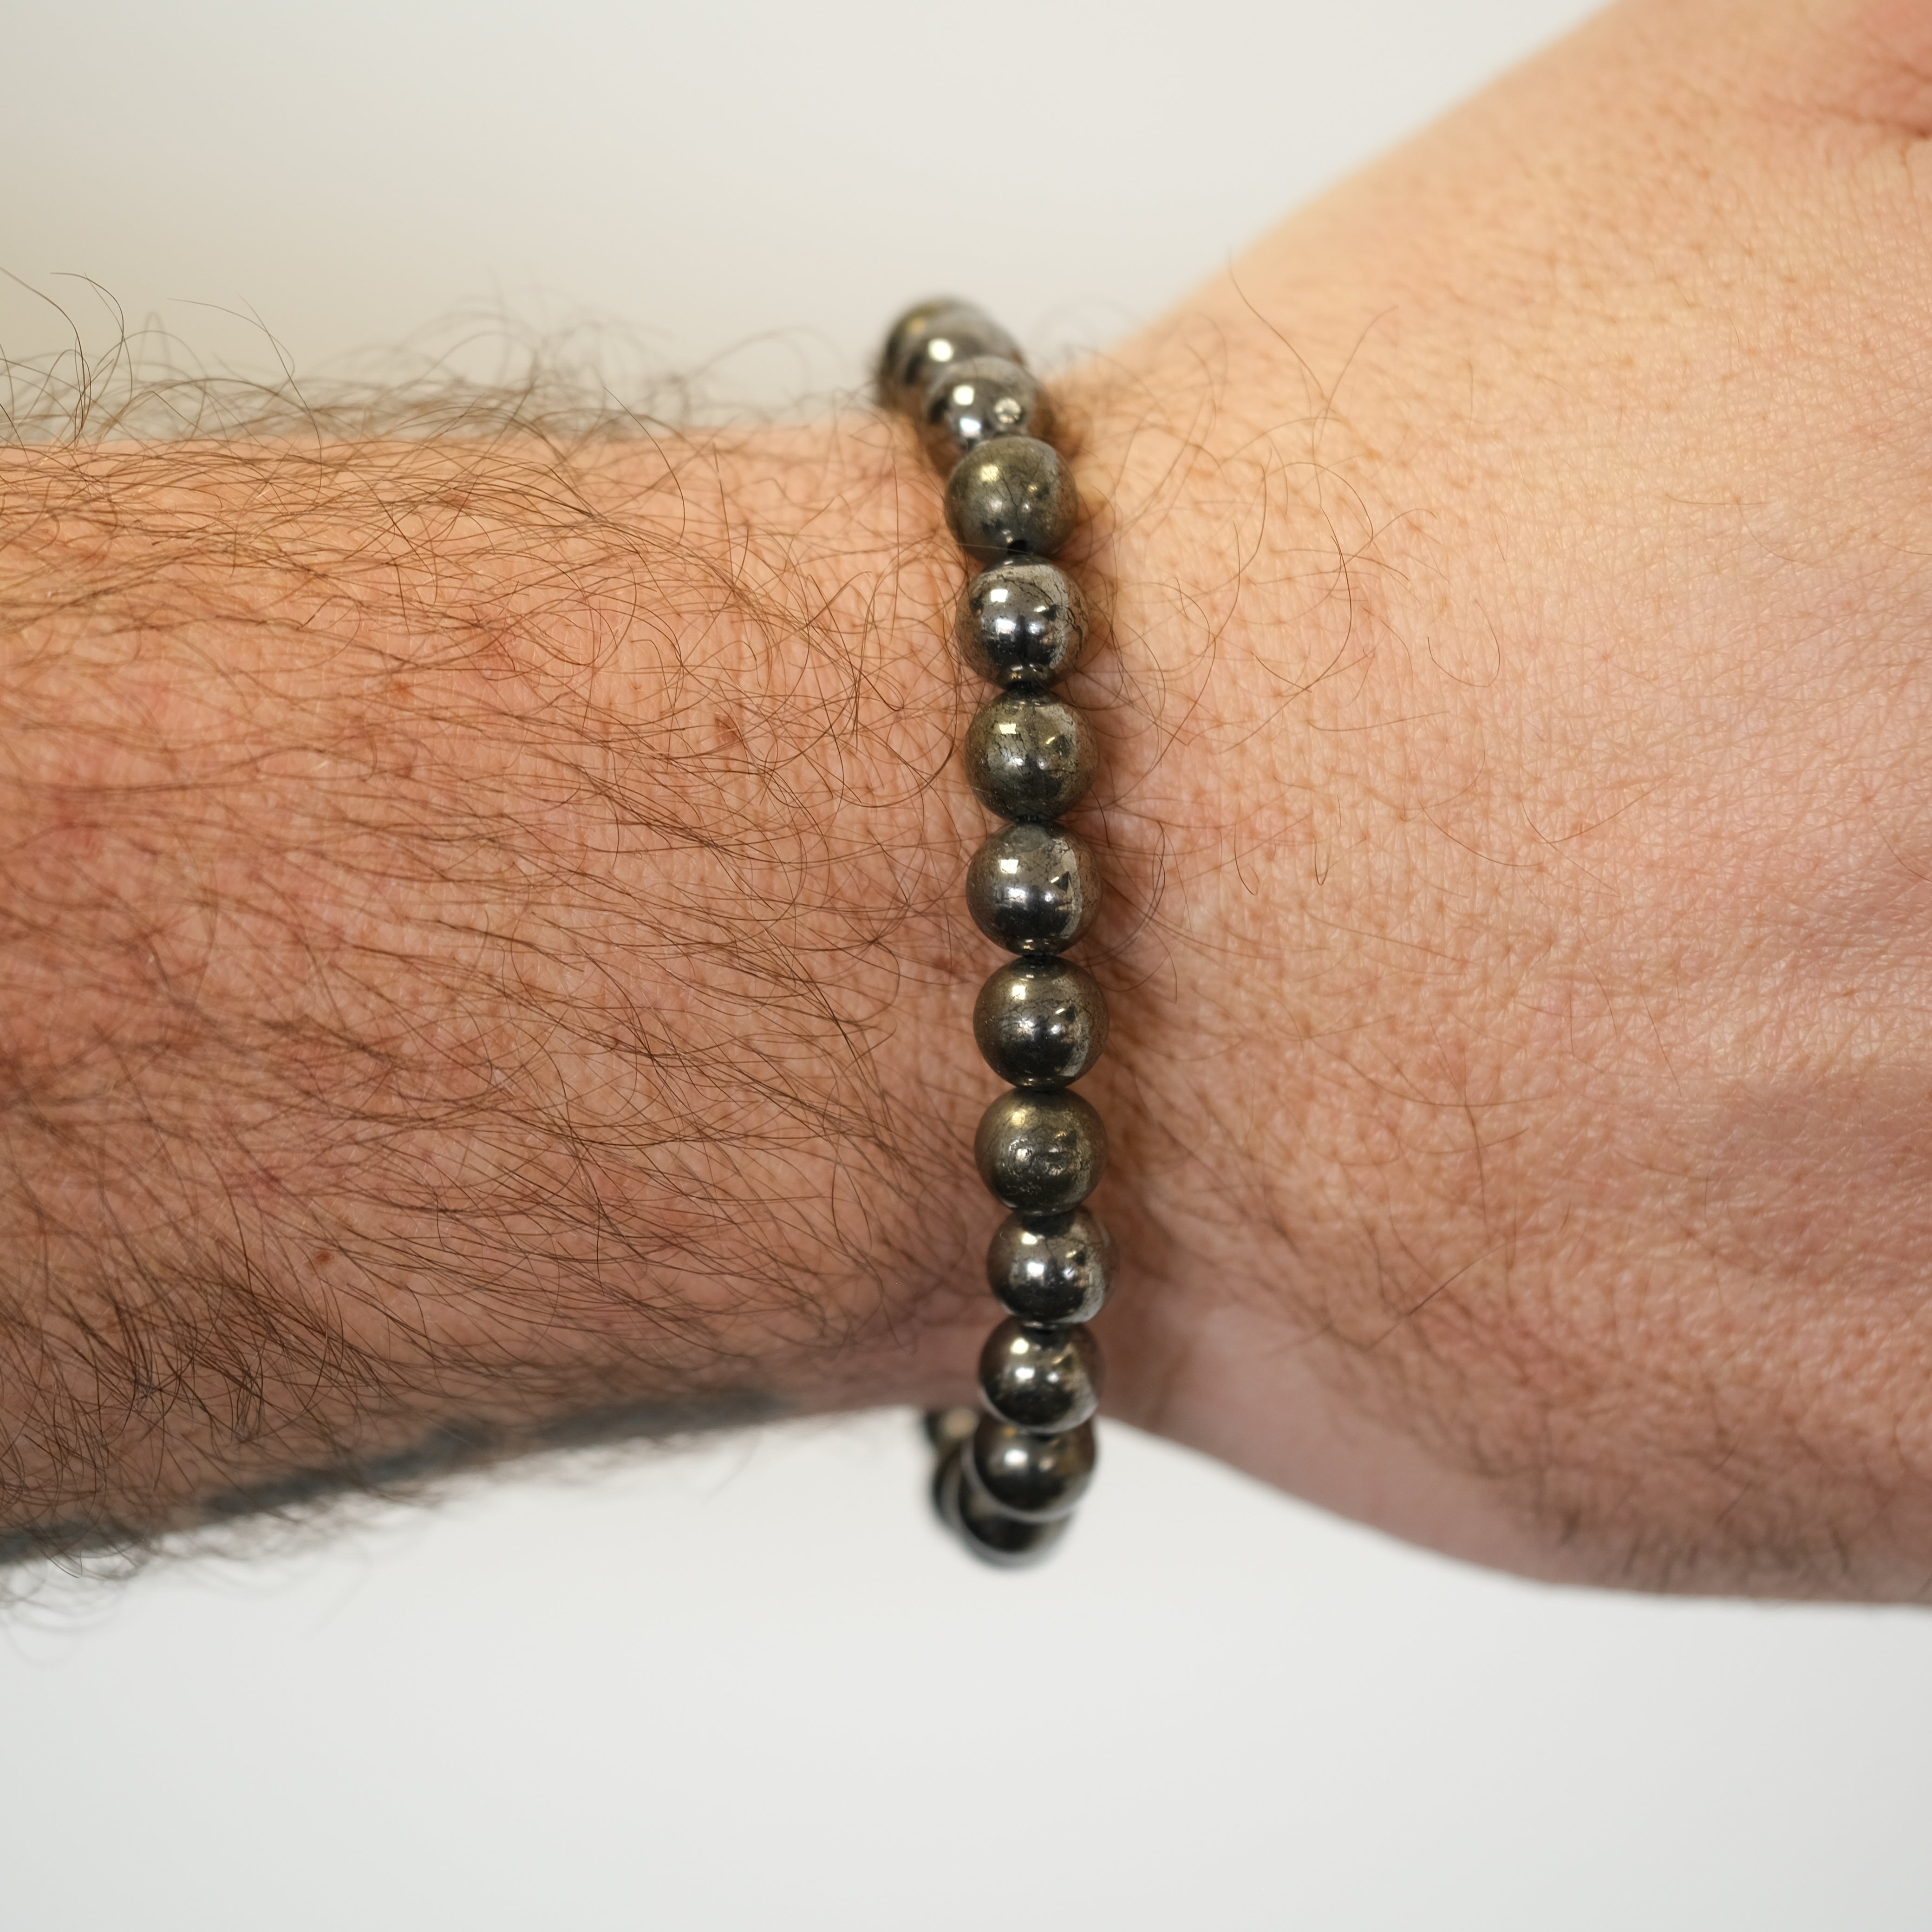 A pyrite bracelet worn on a model's wrist